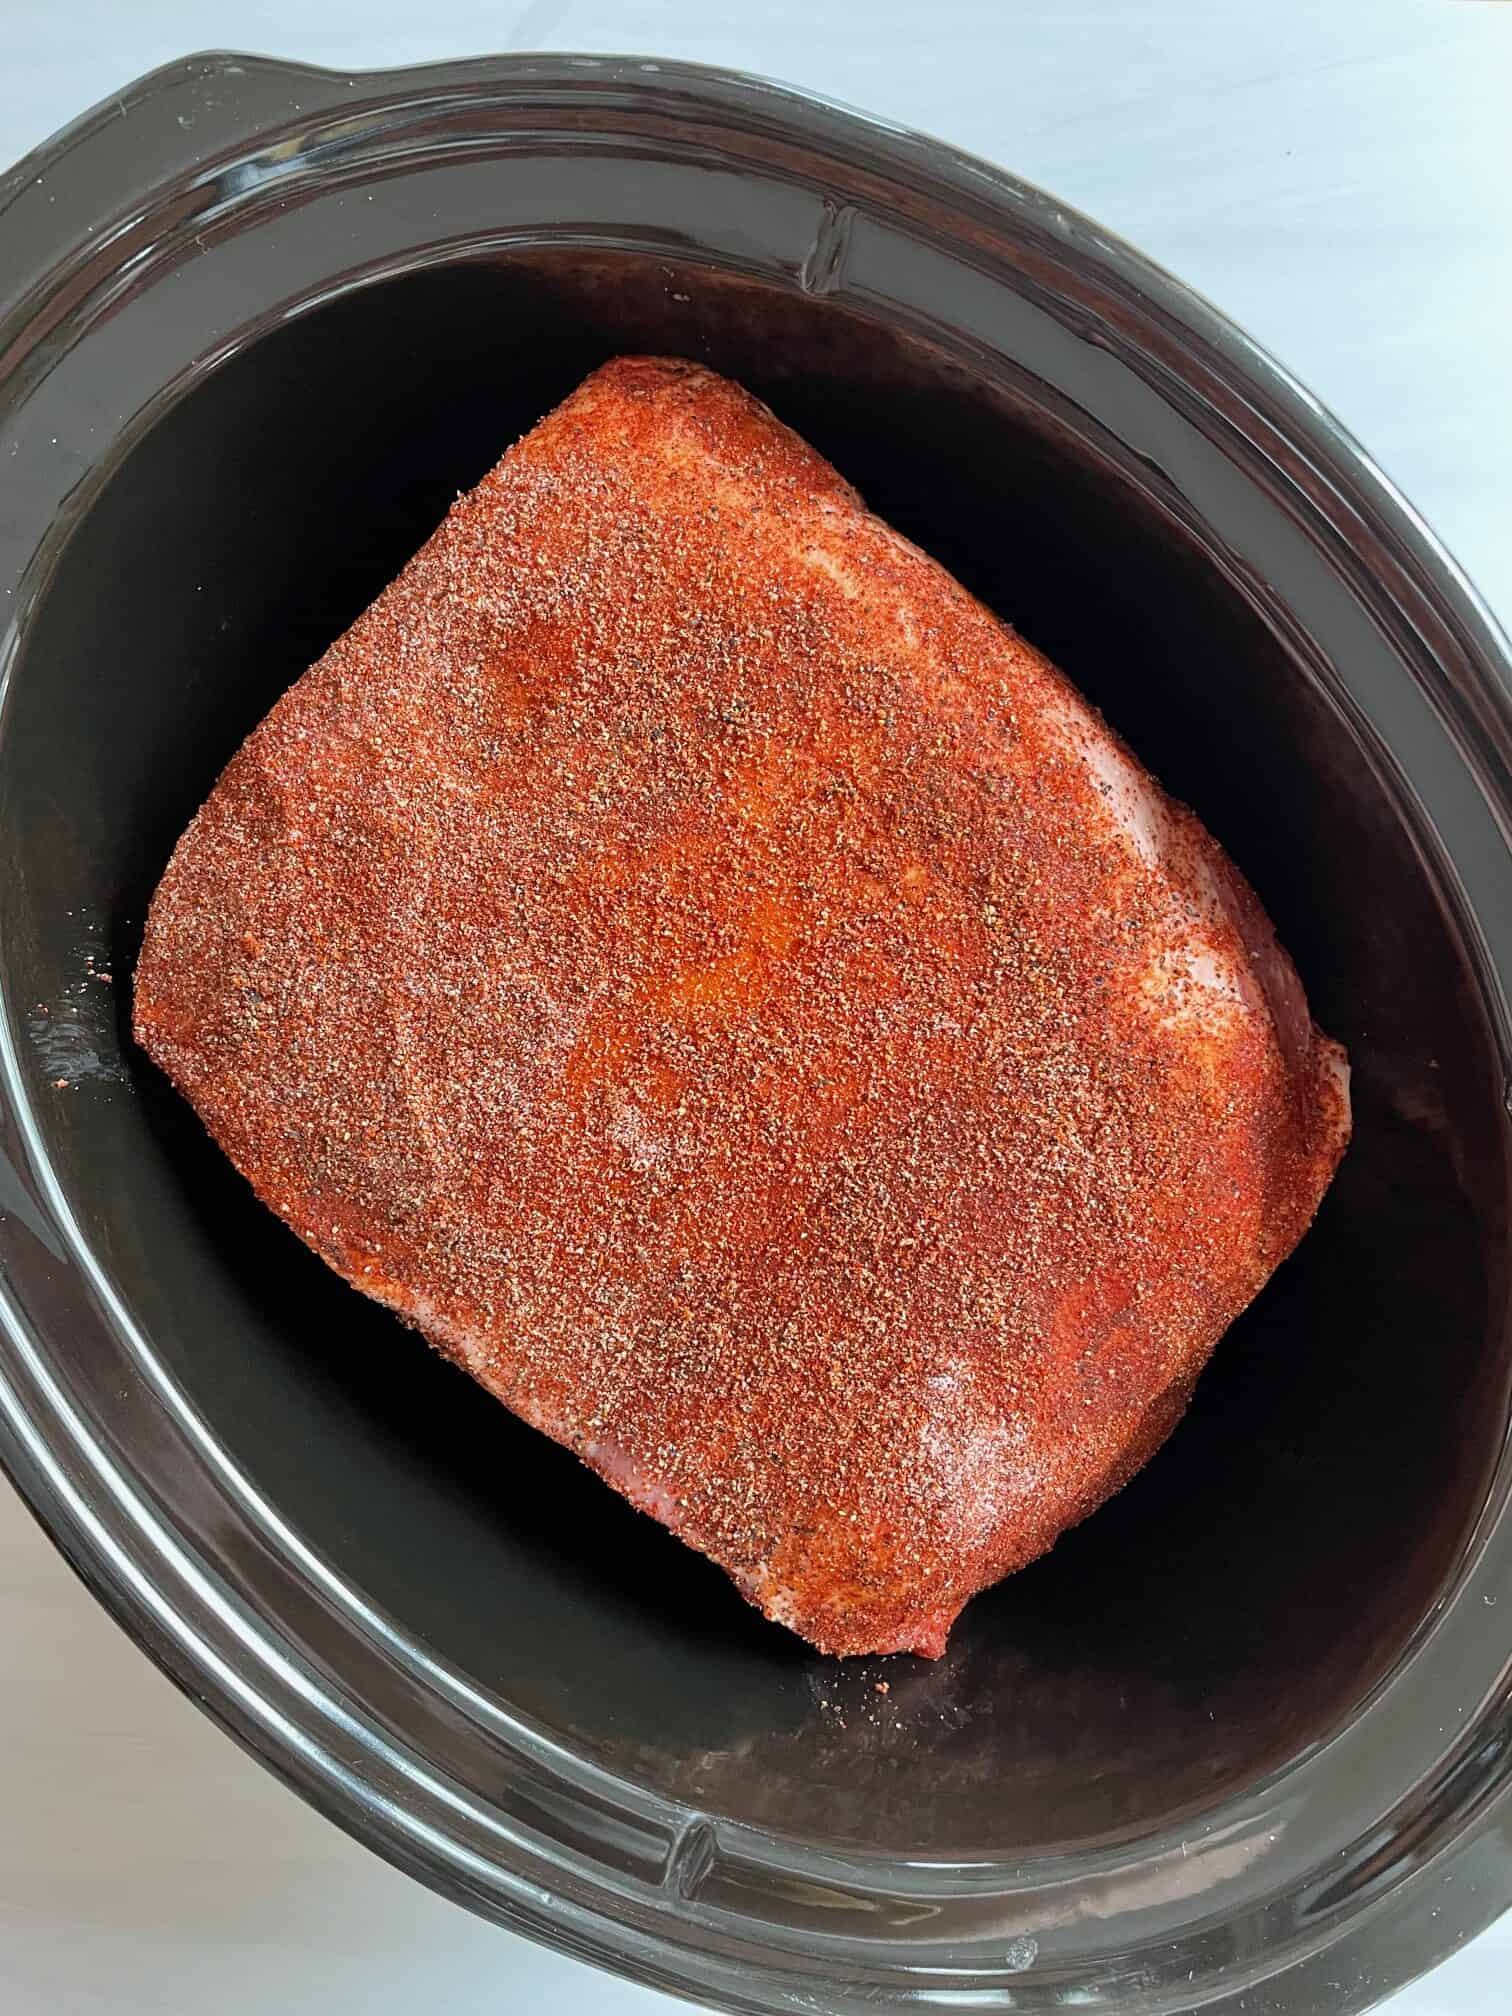 Pork butt is in a black slow cooker